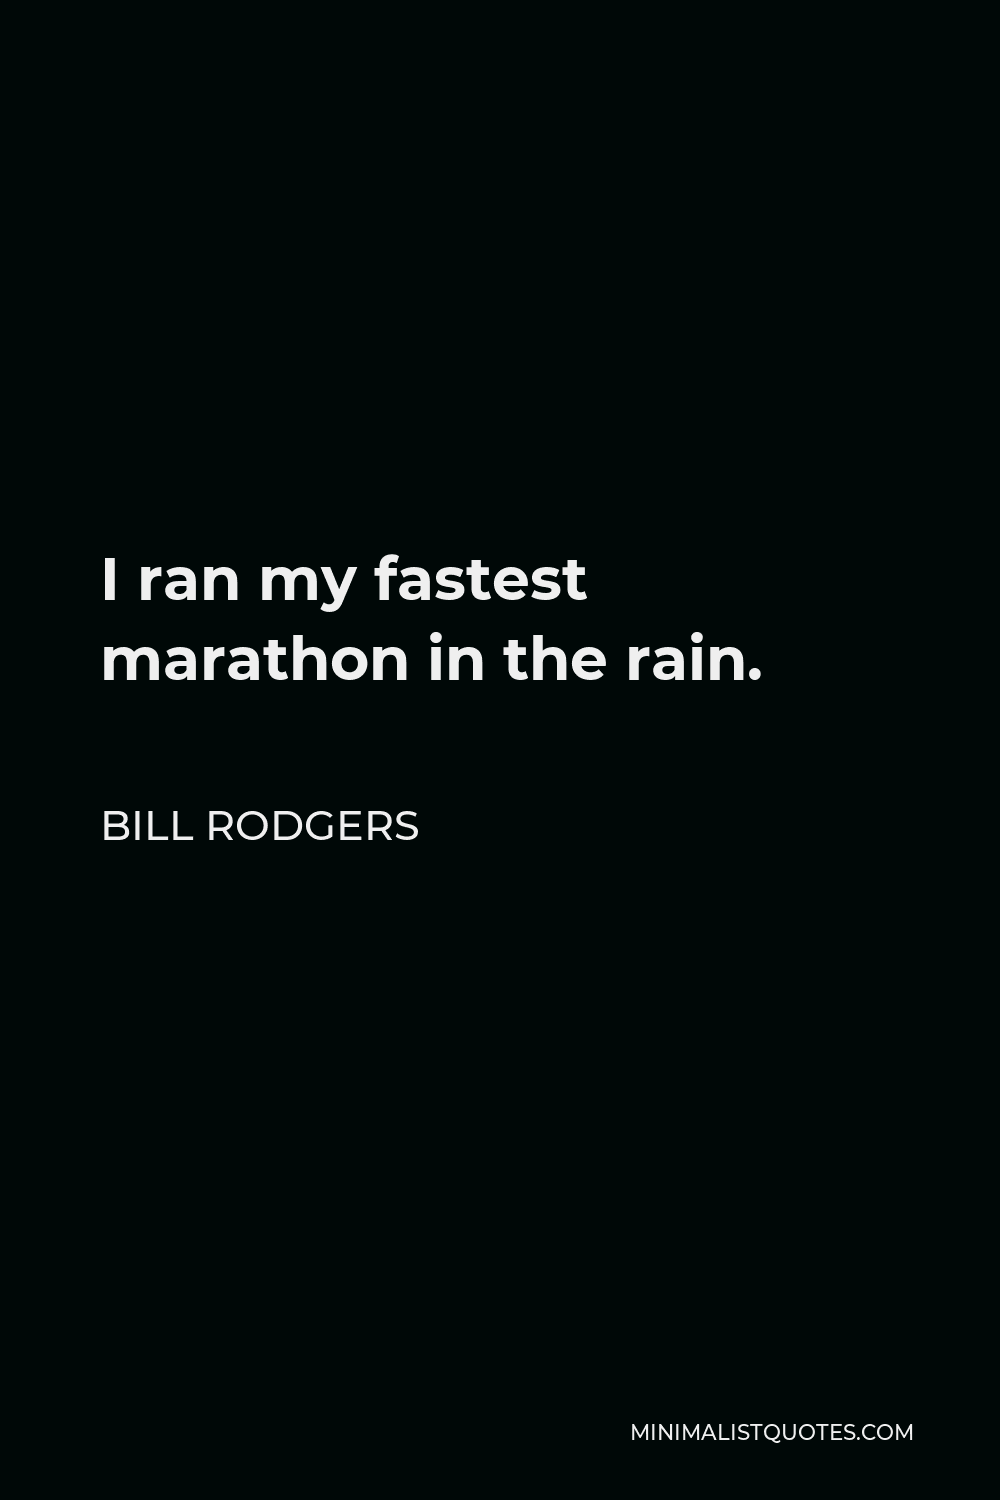 Bill Rodgers Quote - I ran my fastest marathon in the rain.